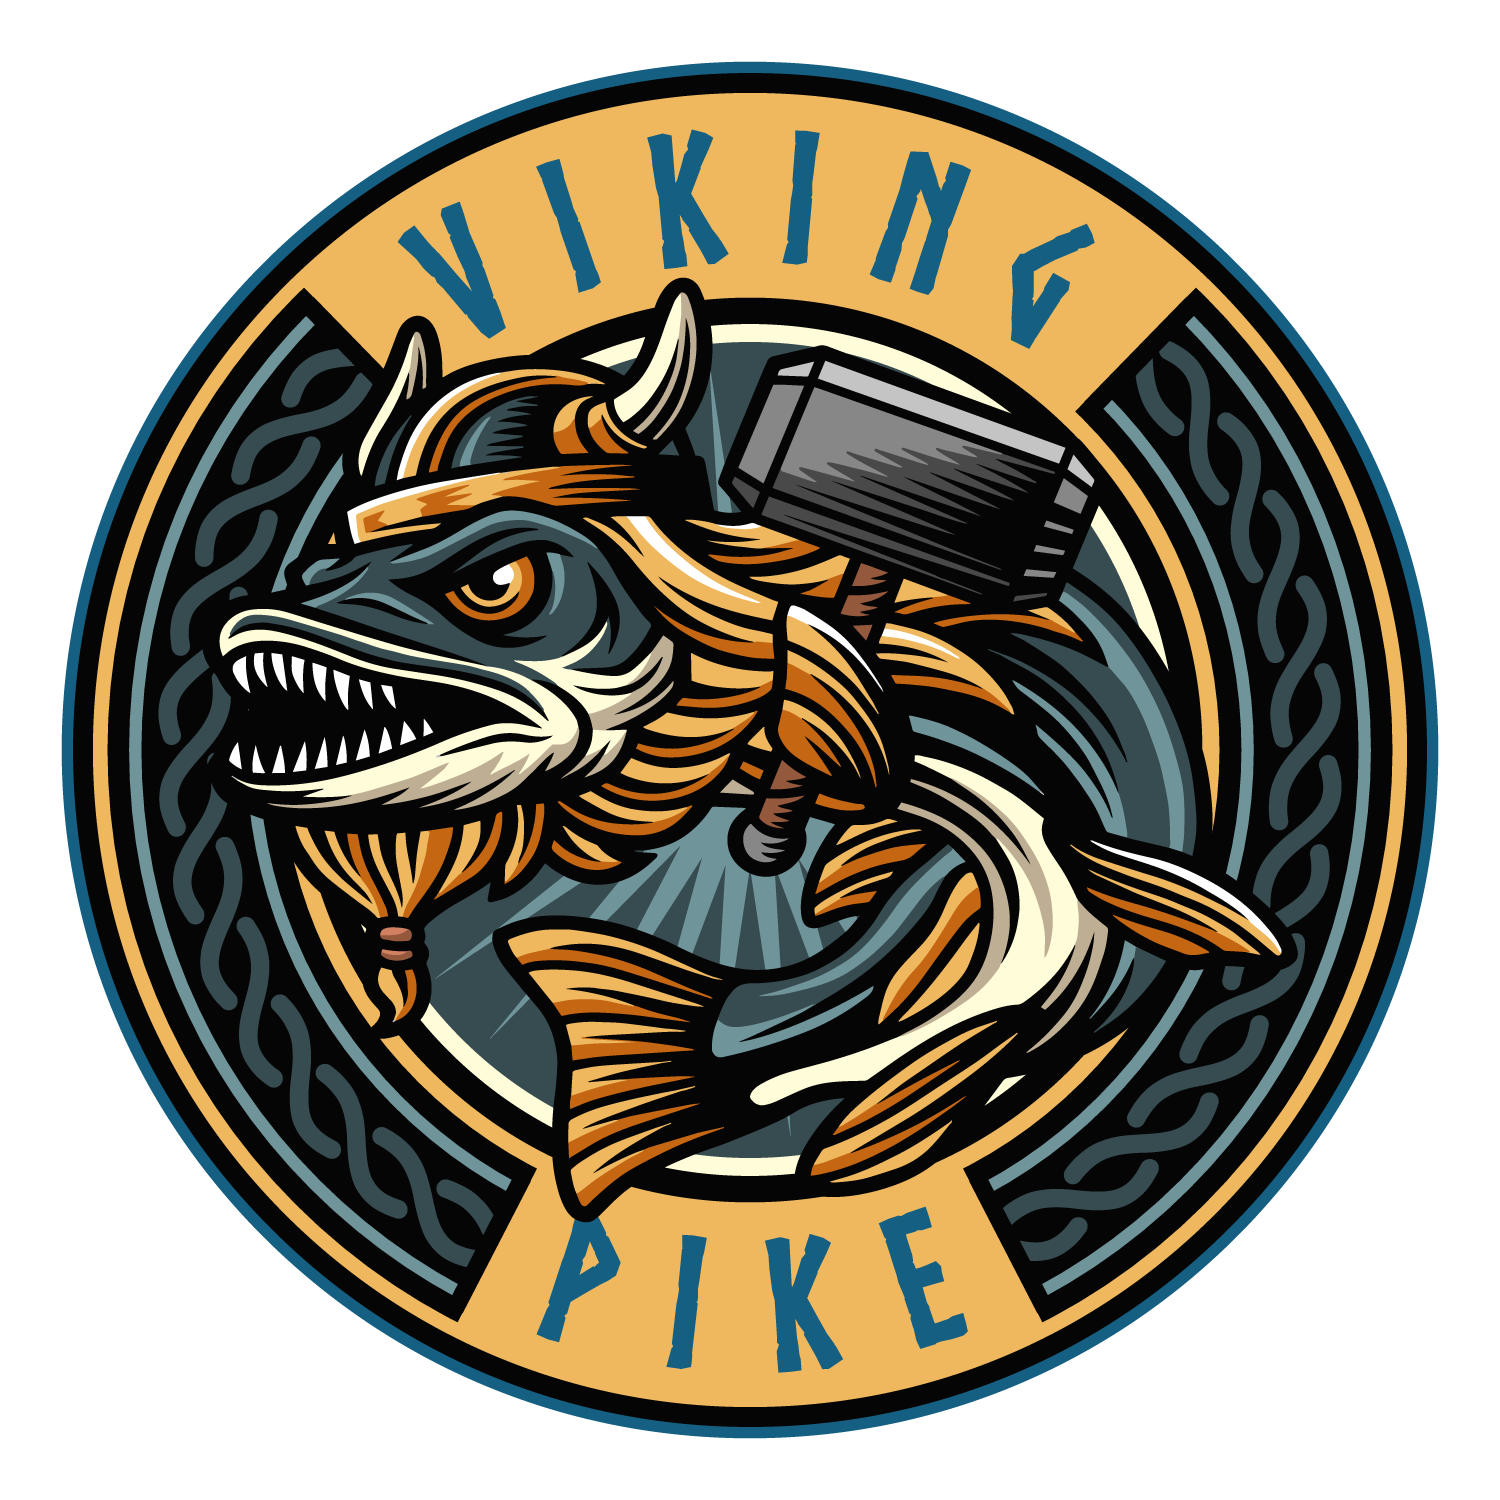 Viking Pike